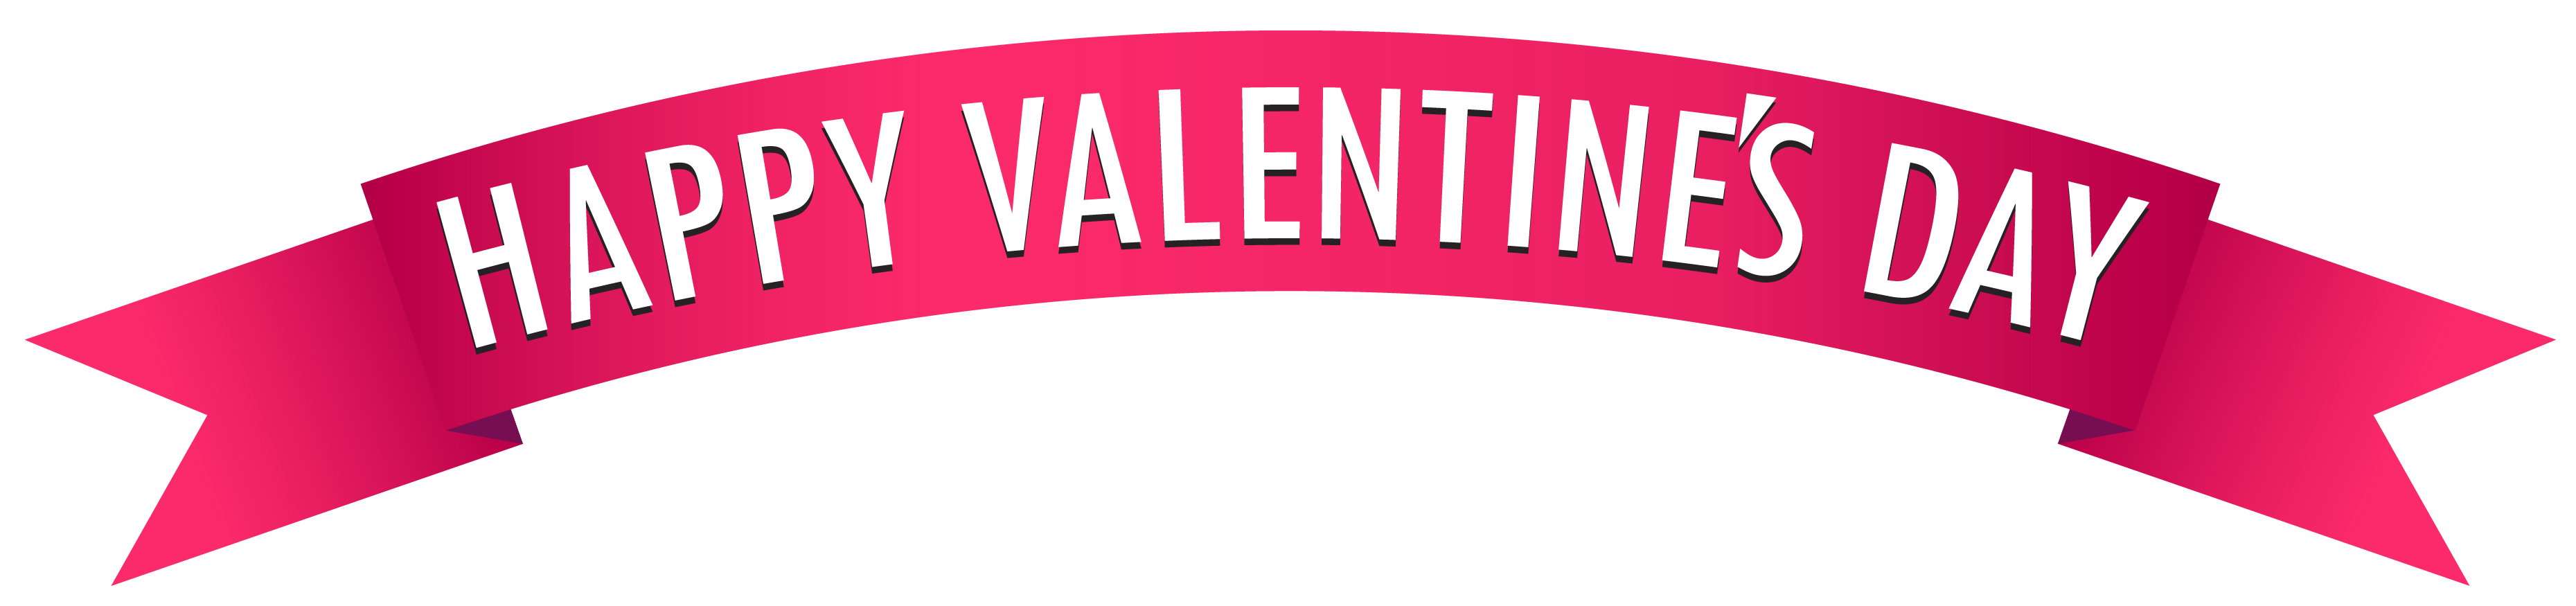 Similiar Valentine S Day Banner Clip Art Keywords.